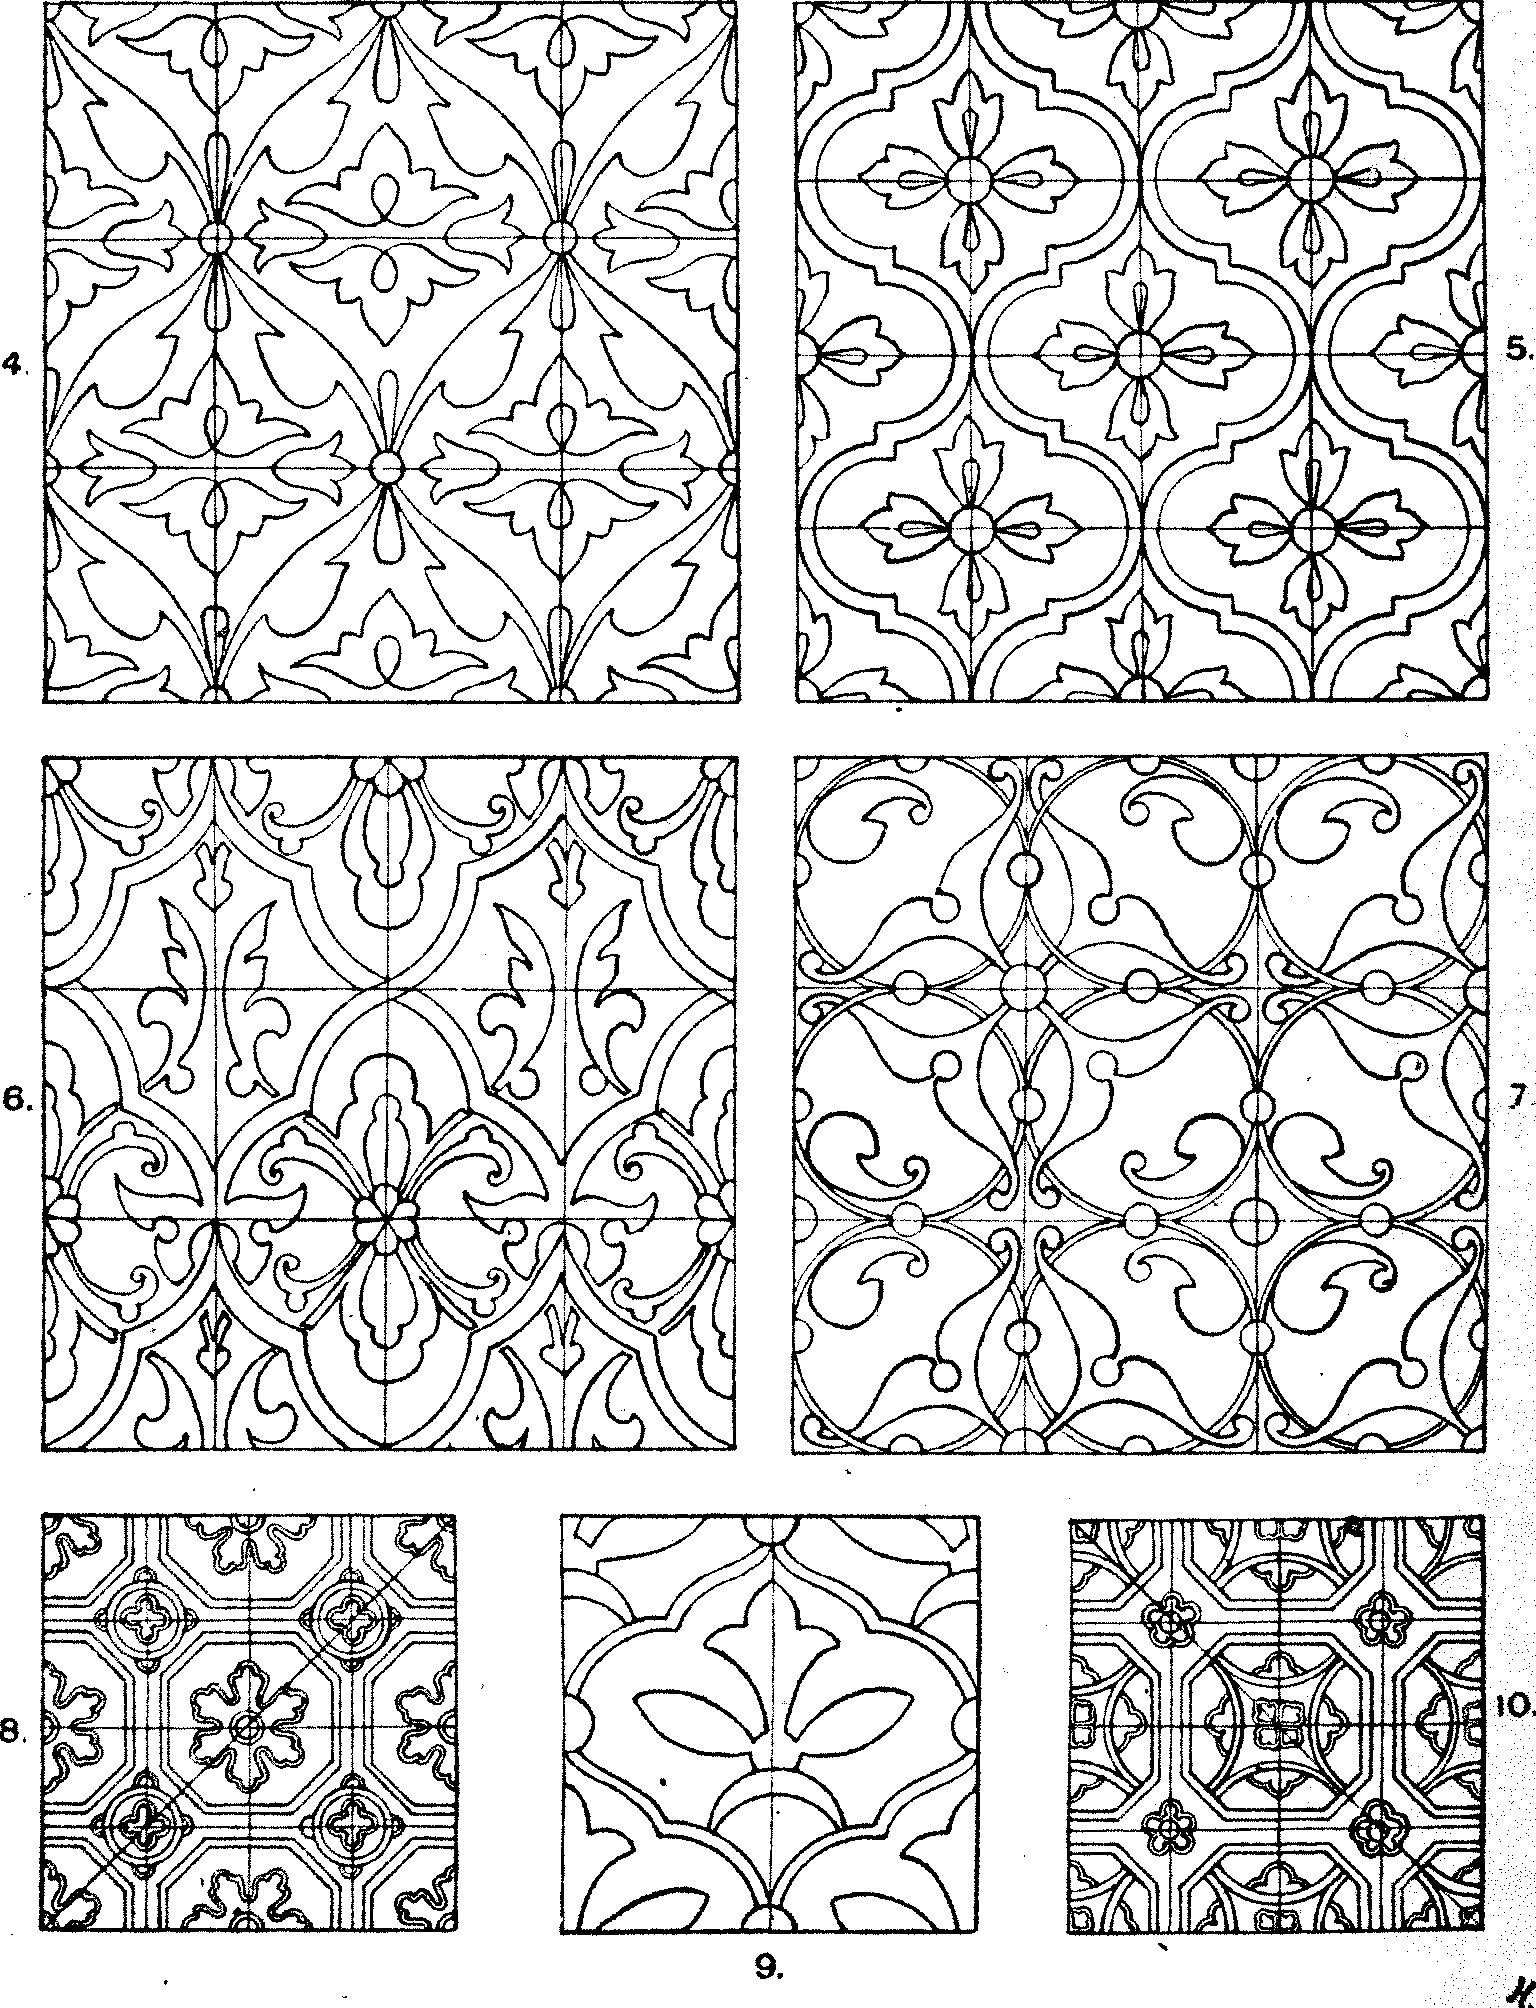 Franz Sales Meyer, Handbook of ornament; a grammar of art, industrial and architectural designing ..., 1900, flic.kr/p/oeXqFZ